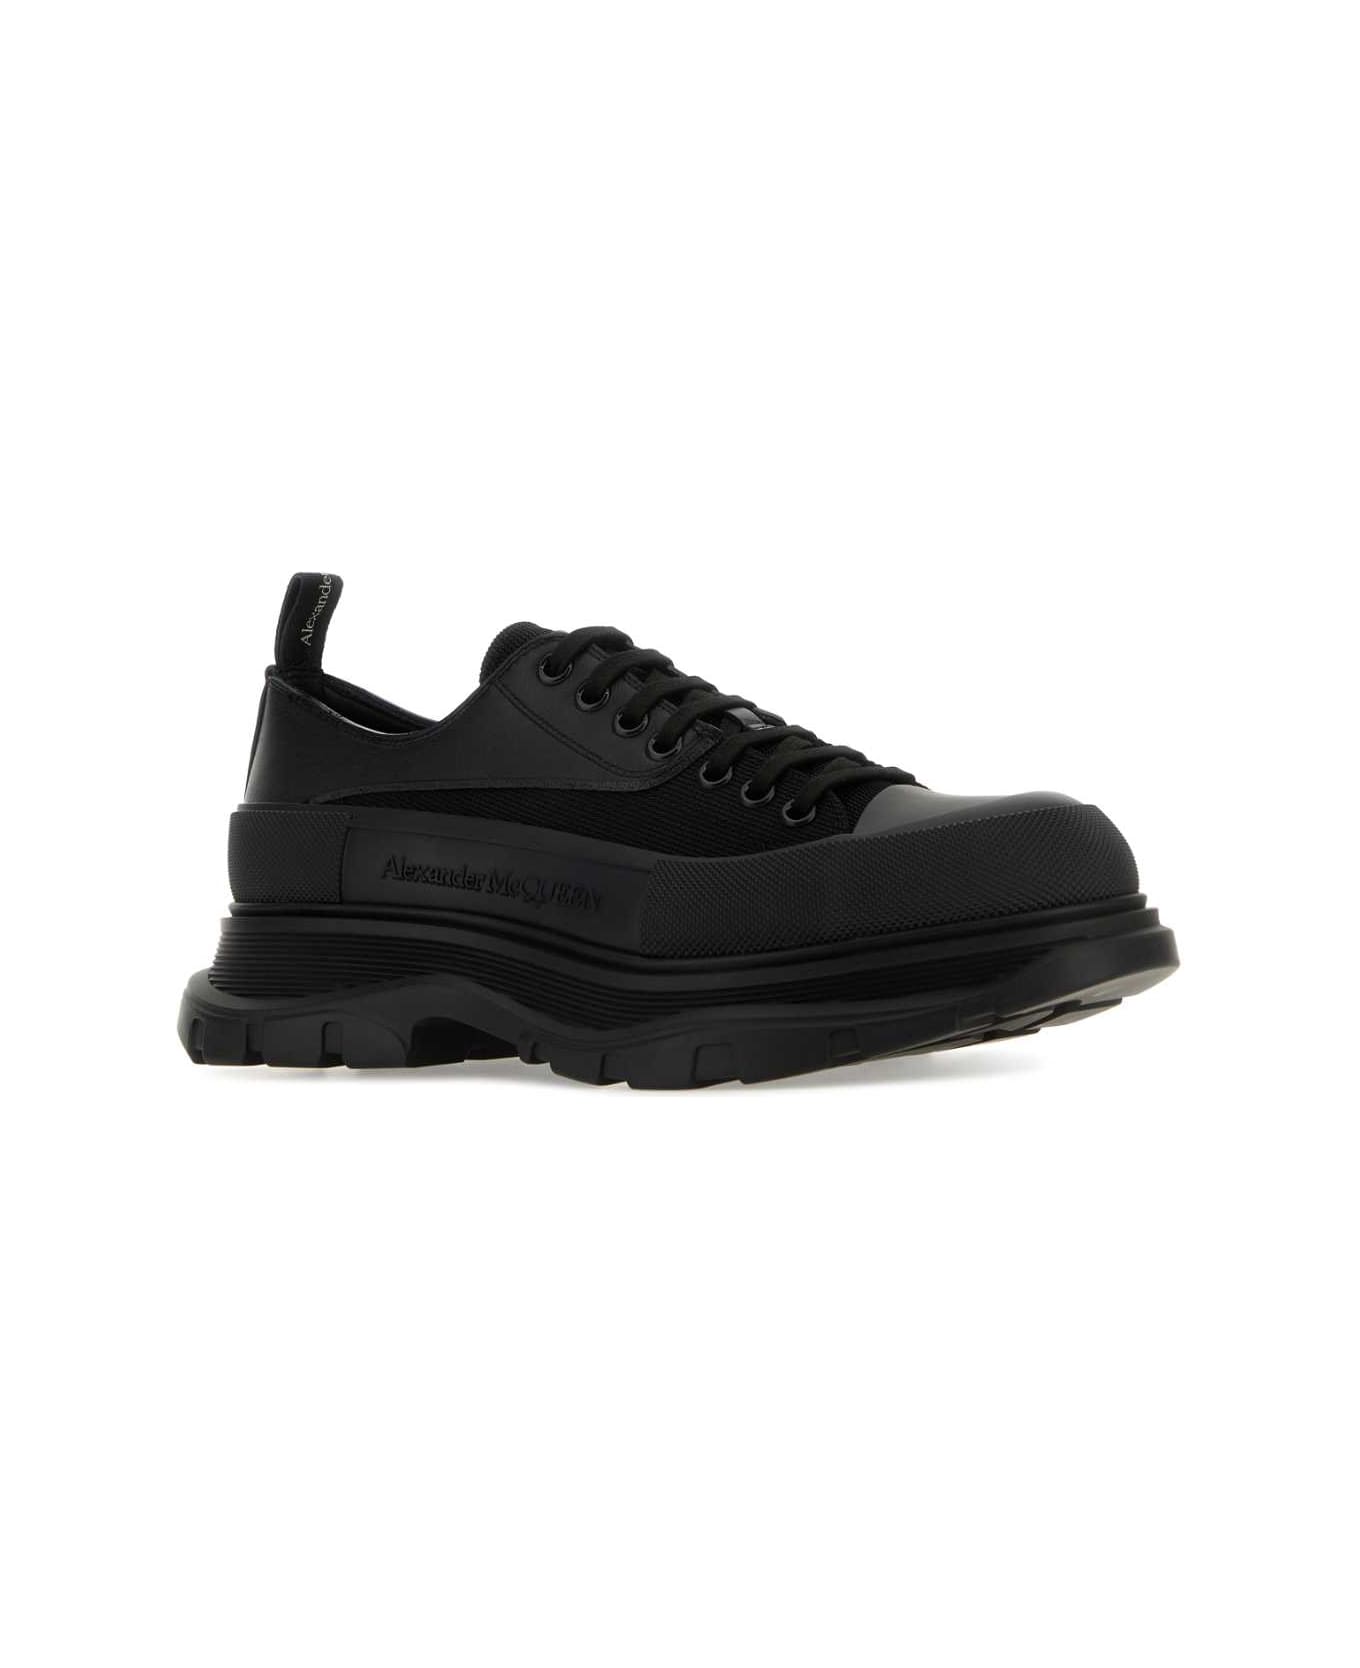 Alexander McQueen Black Leather And Fabric Tread Slick Sneakers - BLACKOF.WHITESILVE